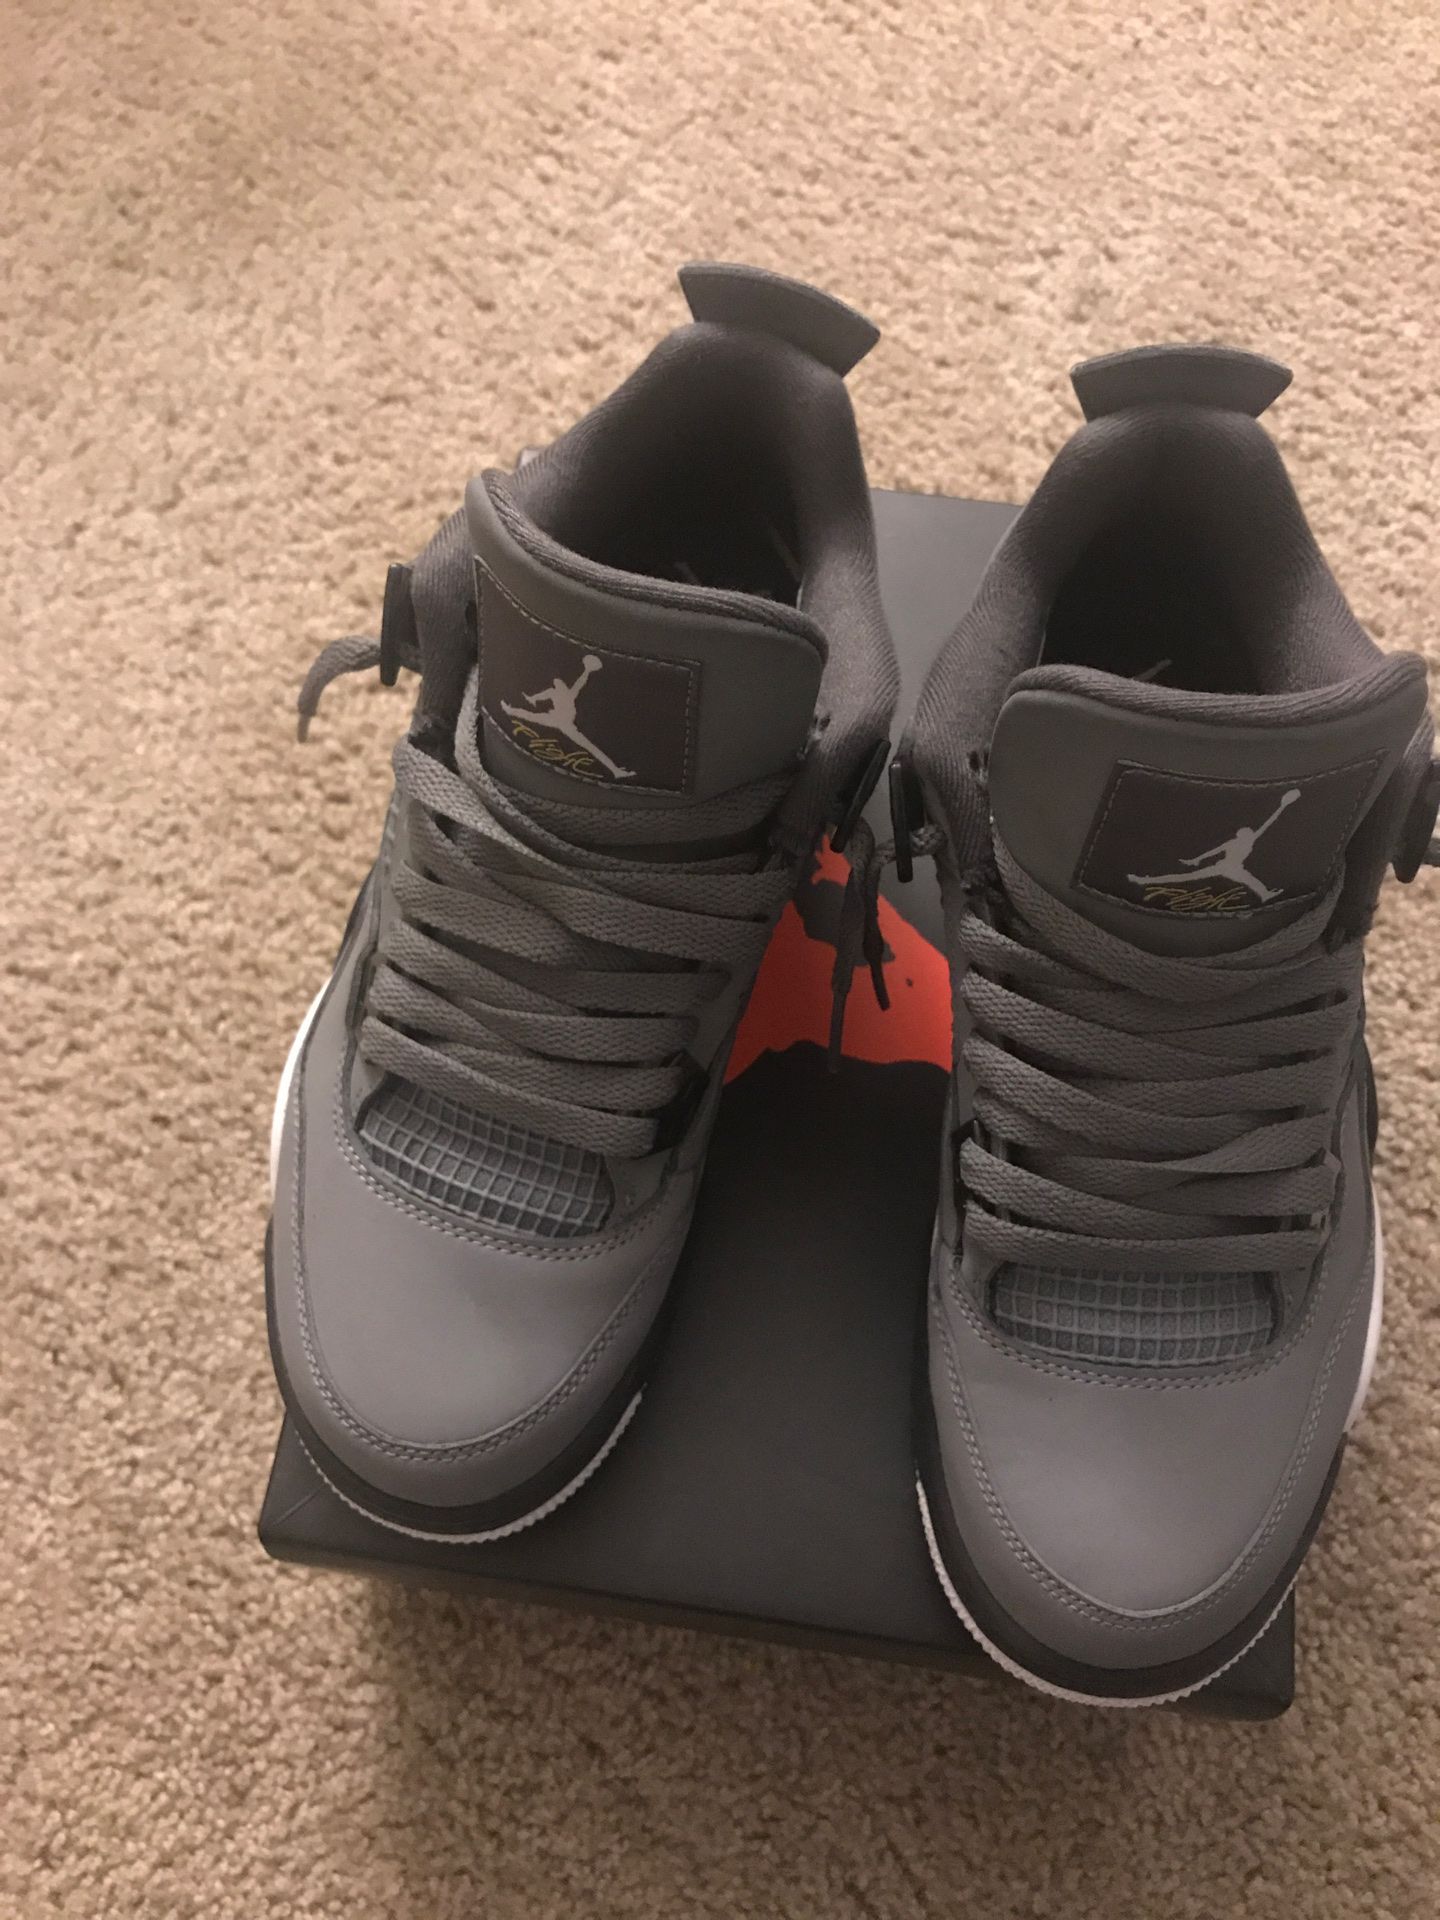 Air Jordan Retro 4 Size 7